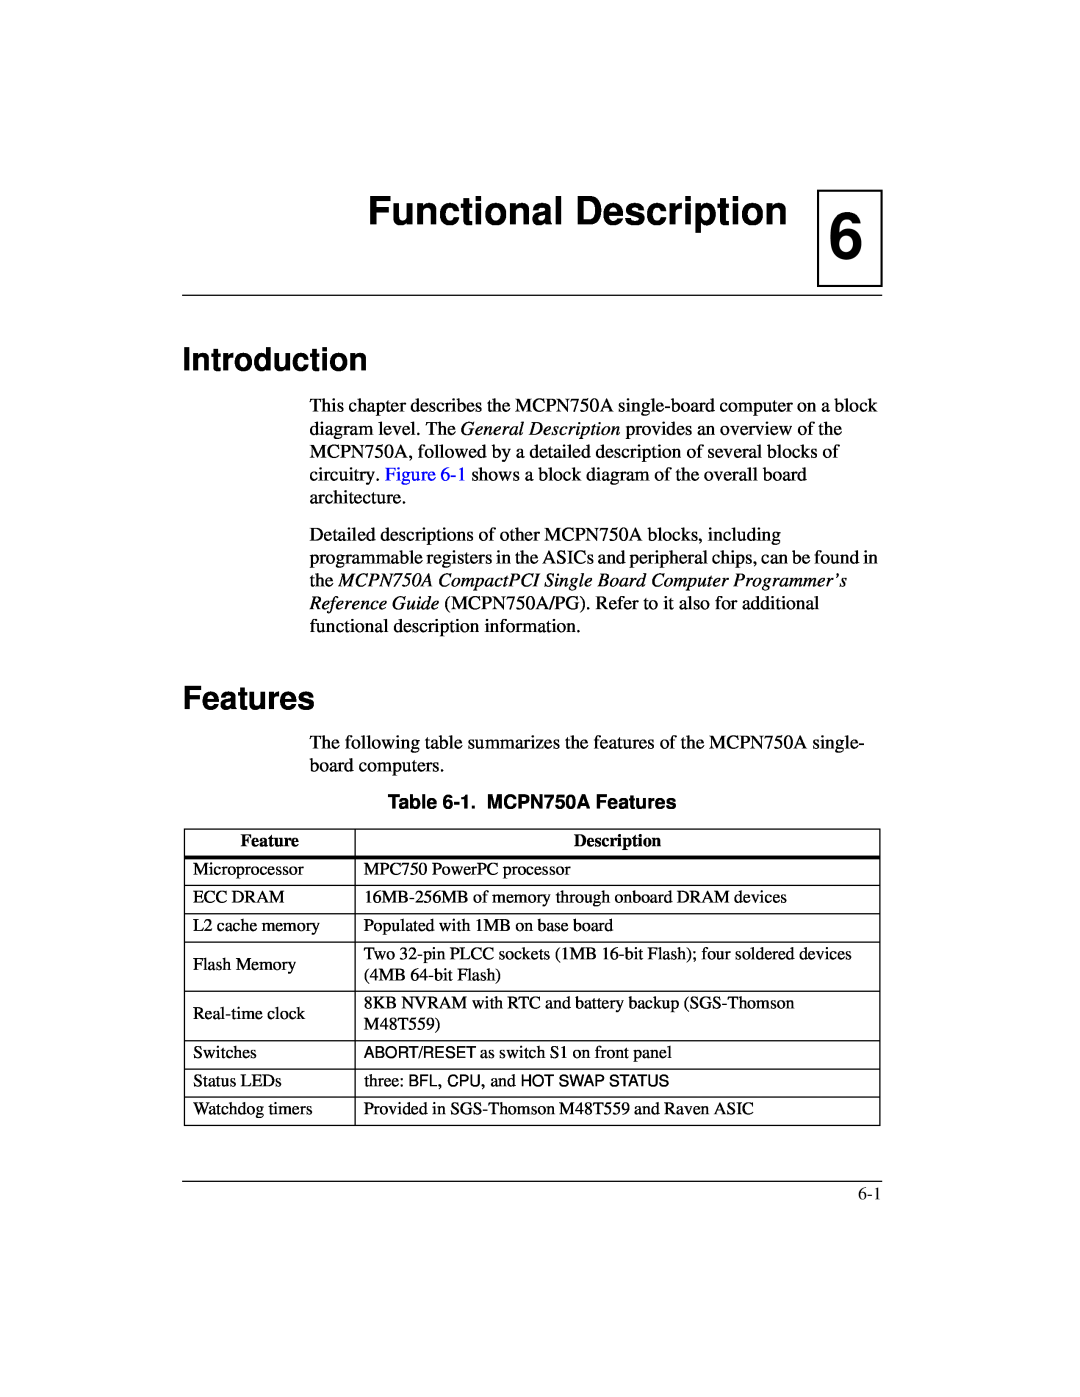 Motorola IH5 manual Functional Description, 1. MCPN750A Features, Introduction 